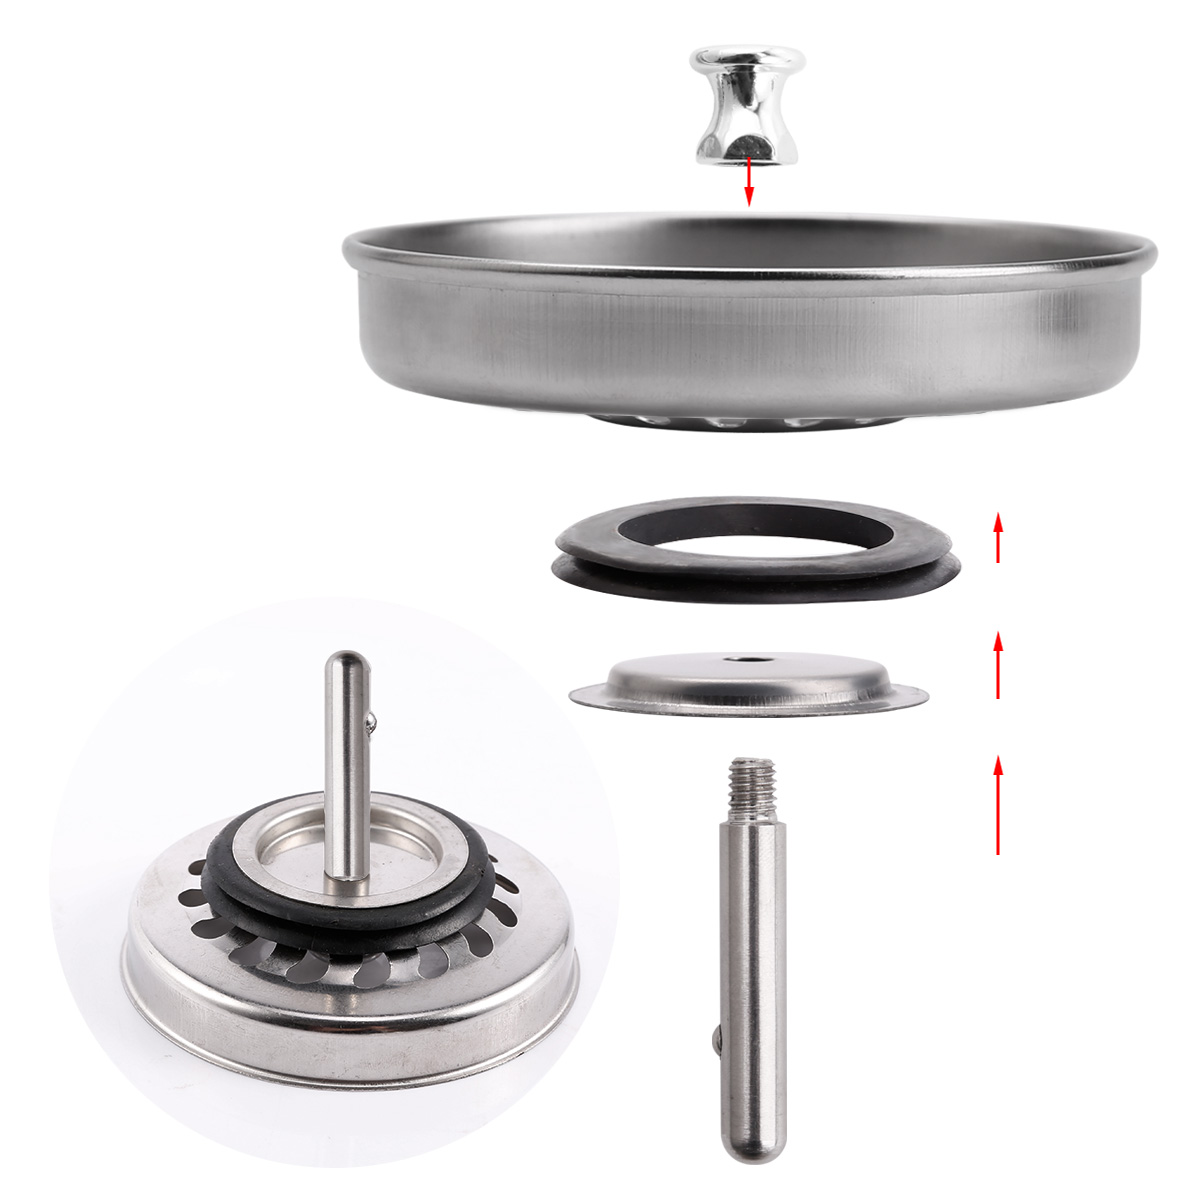 Details About High Quality Kitchen Sink Strainer Waste Plug 80mm Diameter Uk